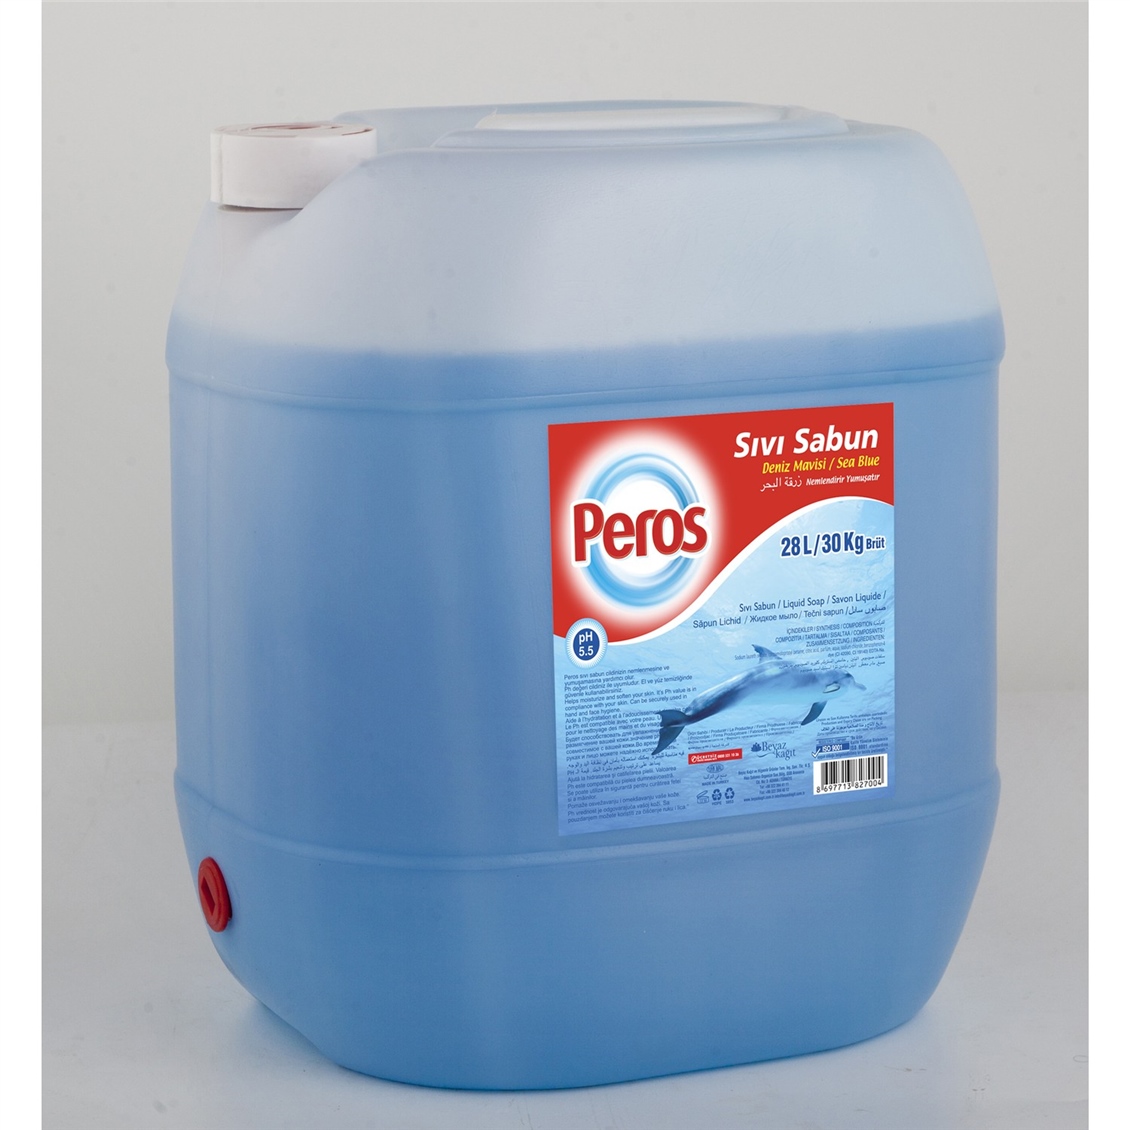 Peros Sıvı Sabun Blue Soft 20 kg - Onur Market